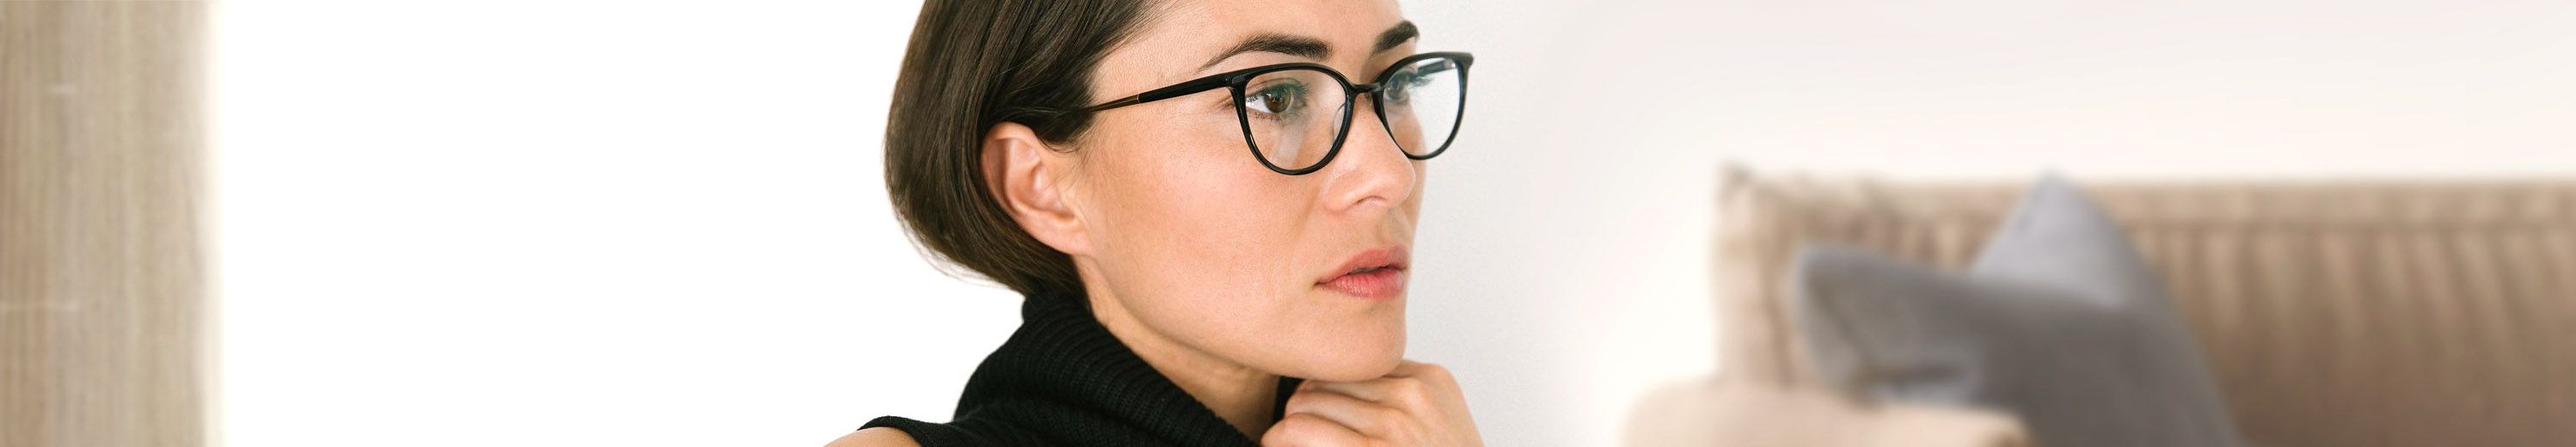 Barton Perreira Eyeglasses for Women